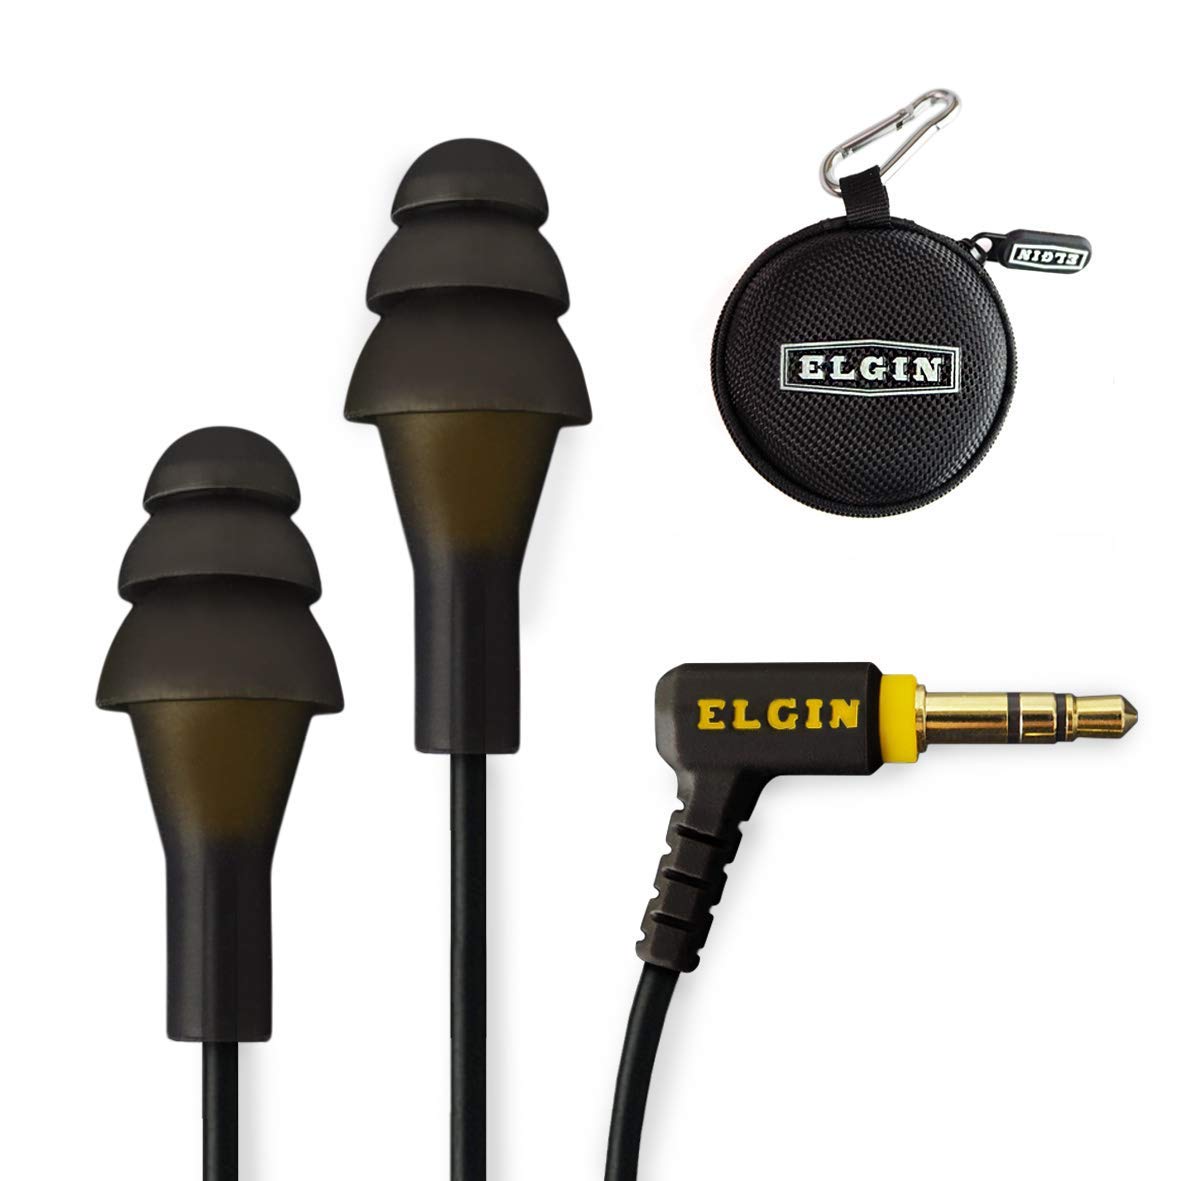 Elgin Ruckus-Ohrstöpsel-Ohrhörer | OSHA-konforme In-Ear-Kopfhörer mit Geräuschreduzierung: Isolierende Ohrstöpsel-Ohrhörer